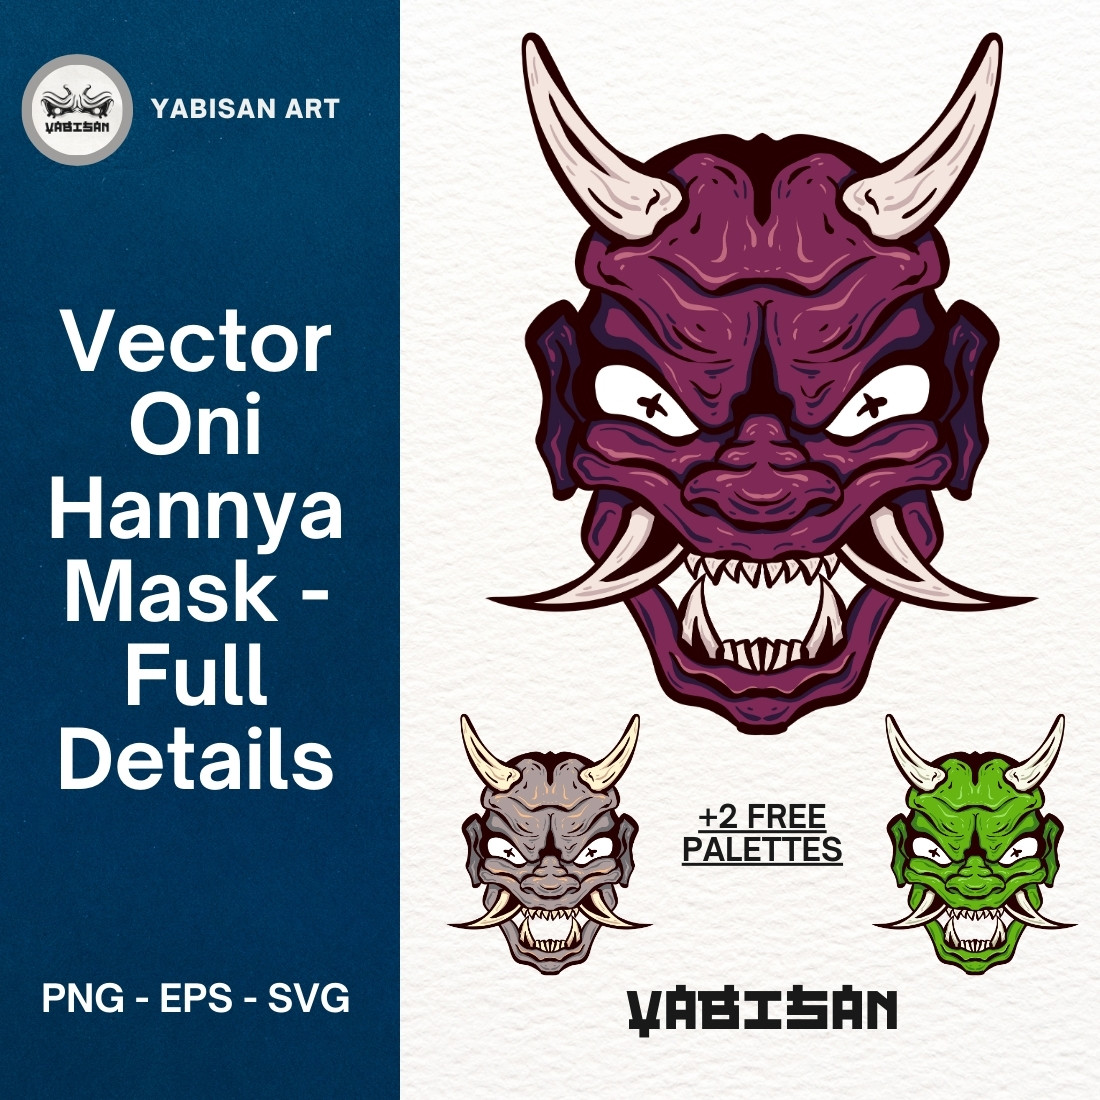 Oni Hannya Mask art 2 - Full Details preview image.